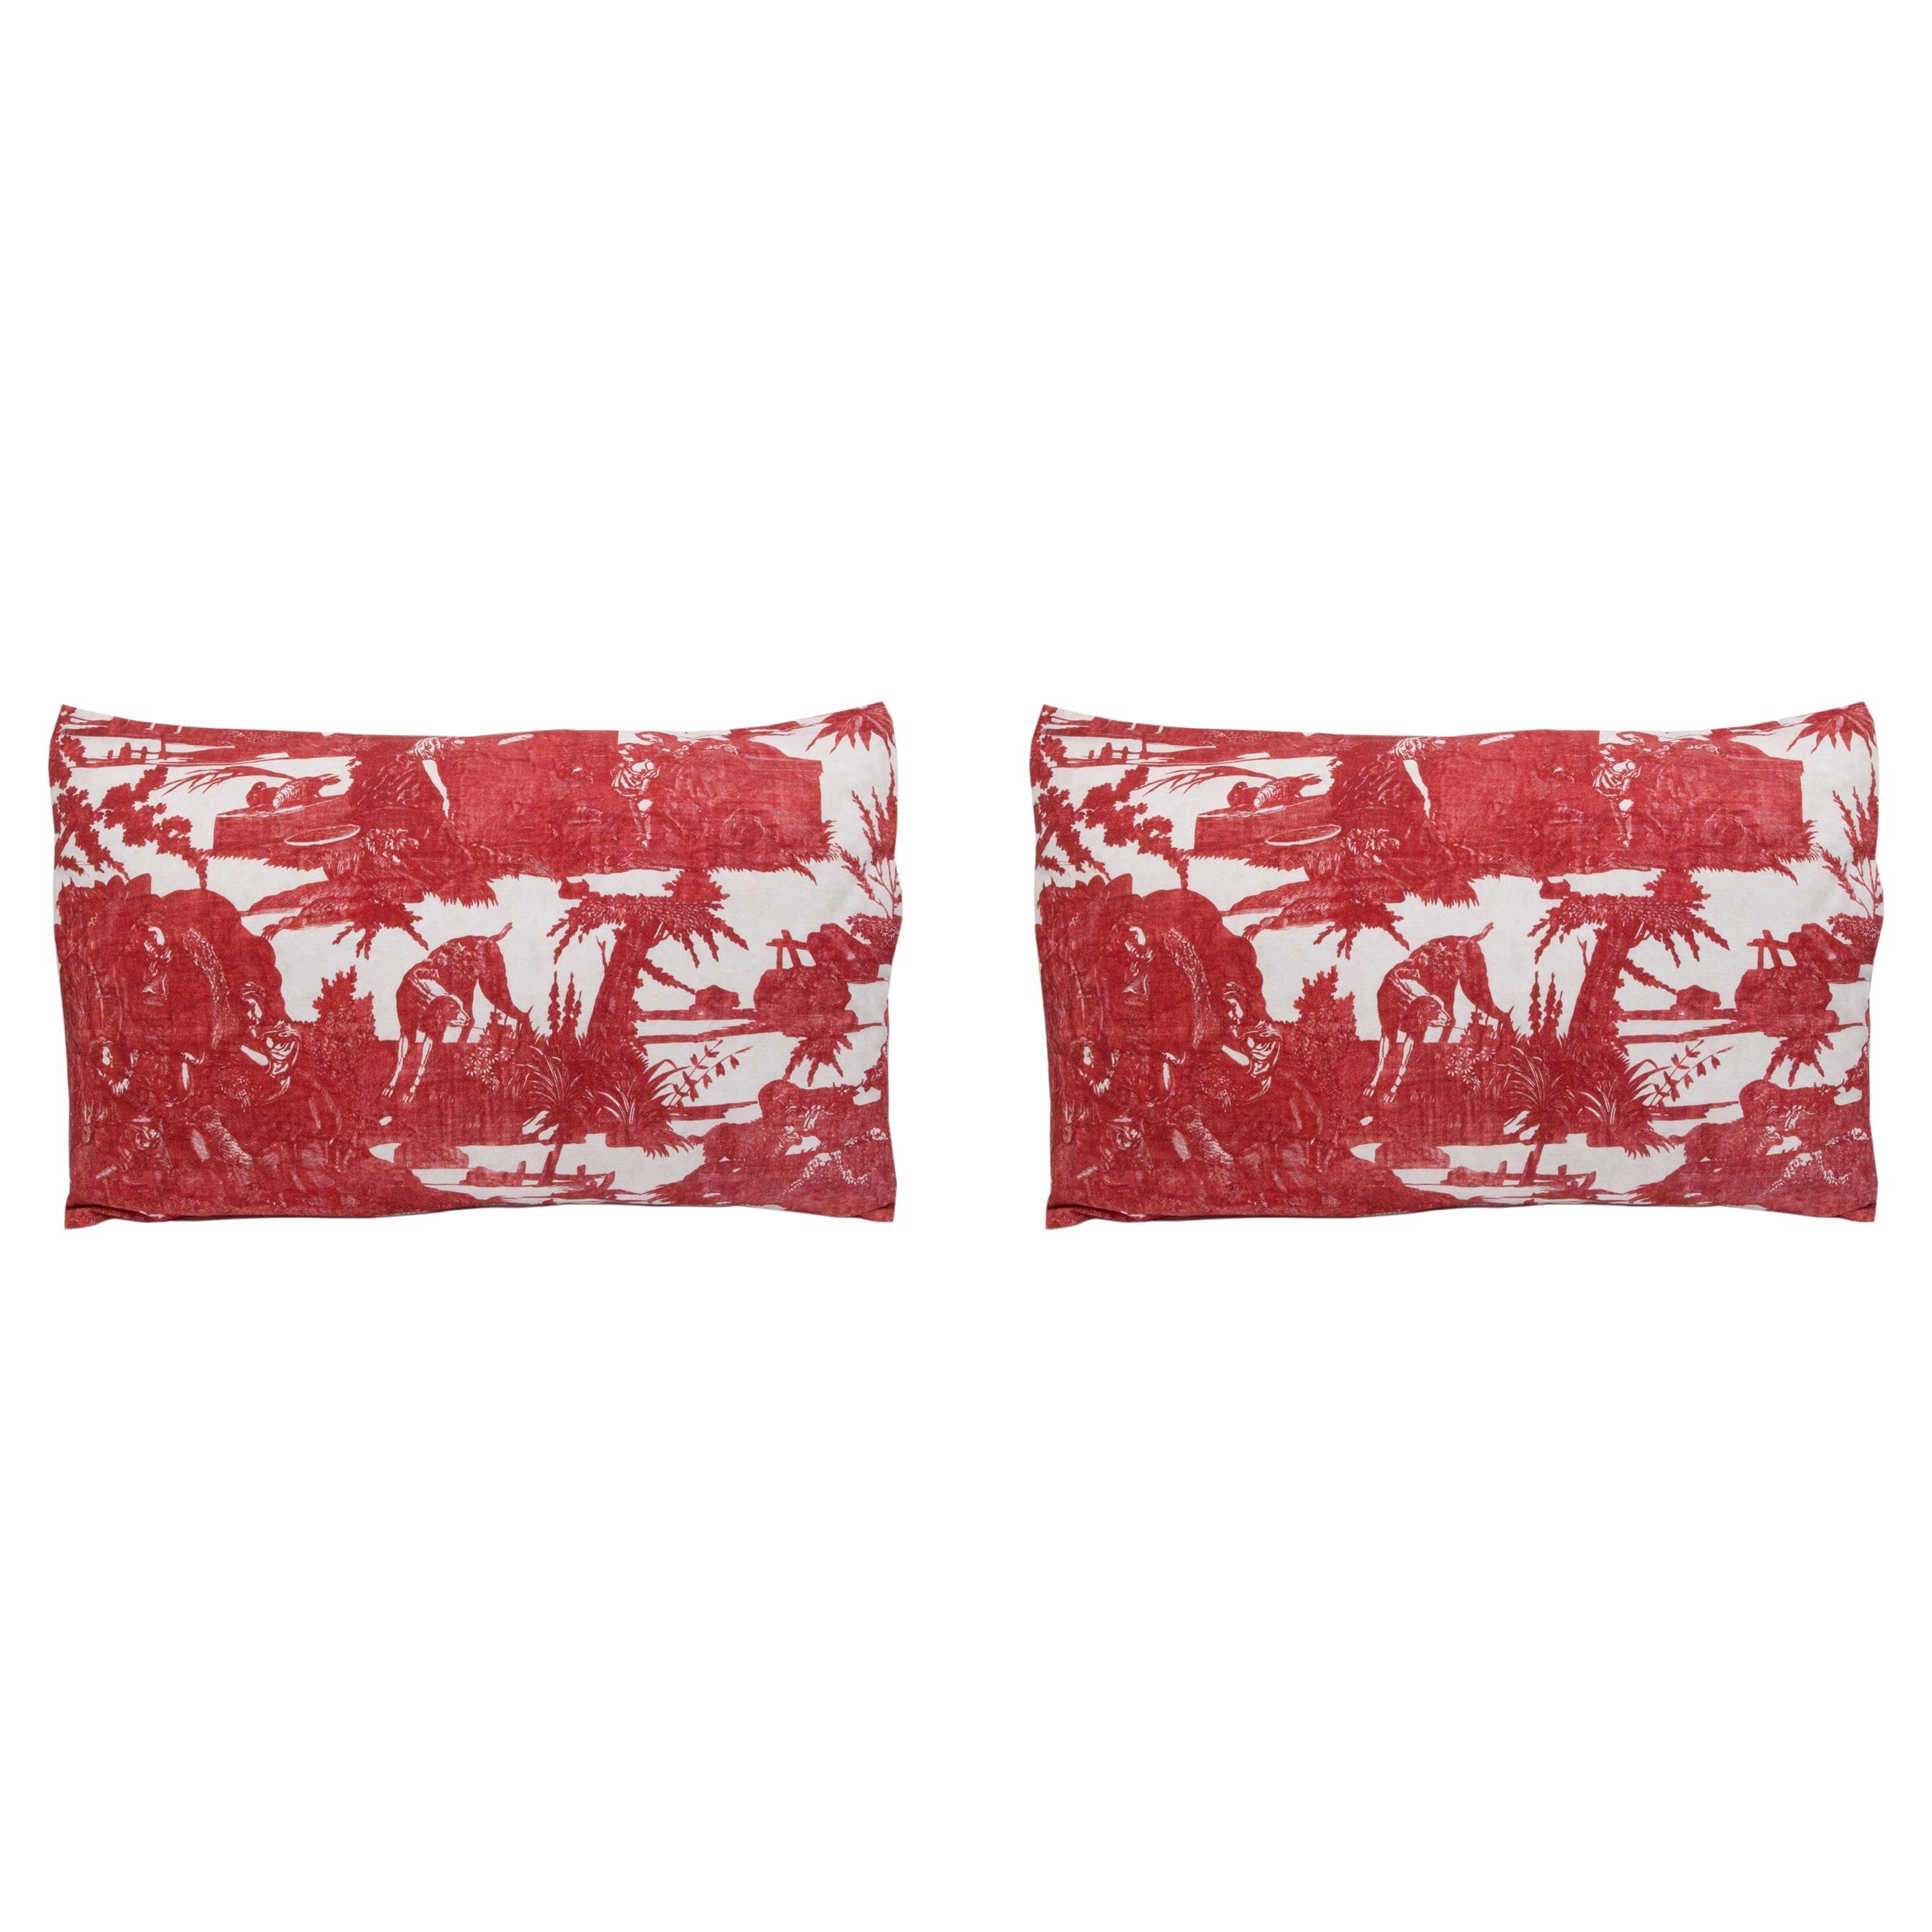 Pair of Large Linen Pillow Cushions - Beautiran pattern - Made in Paris